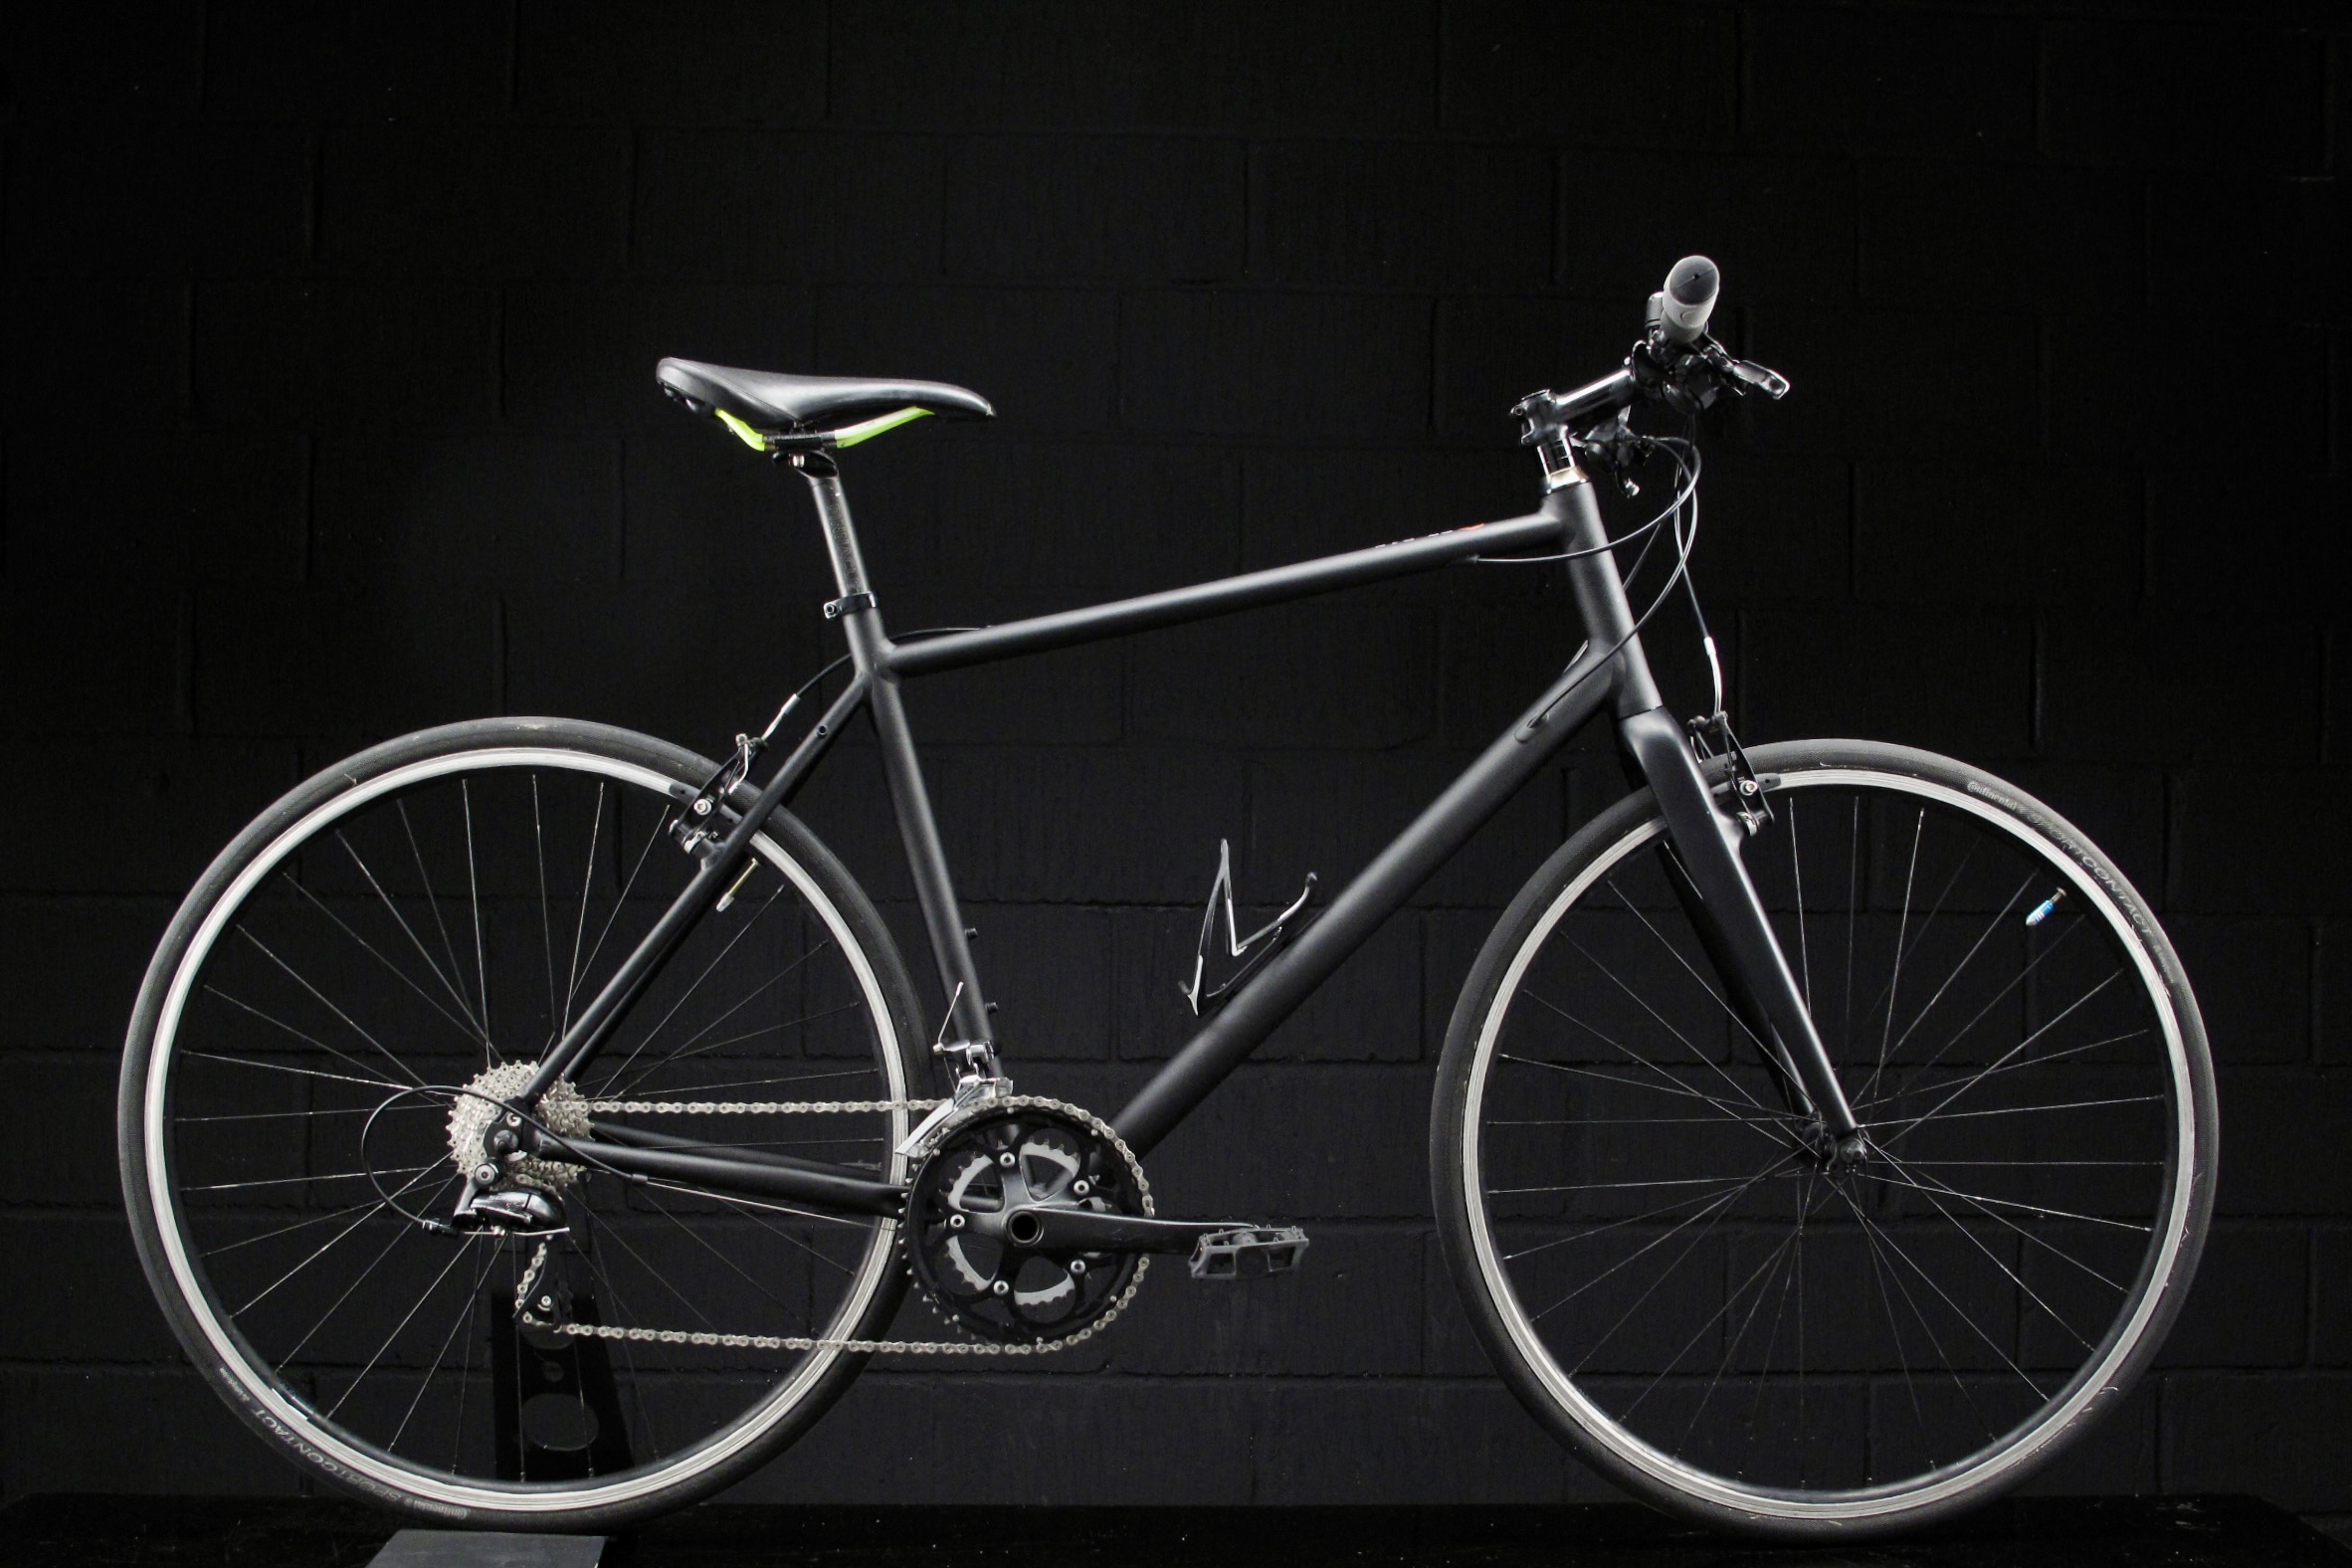 02-015 Pinnacle Hybrid Bike 54cm Frame